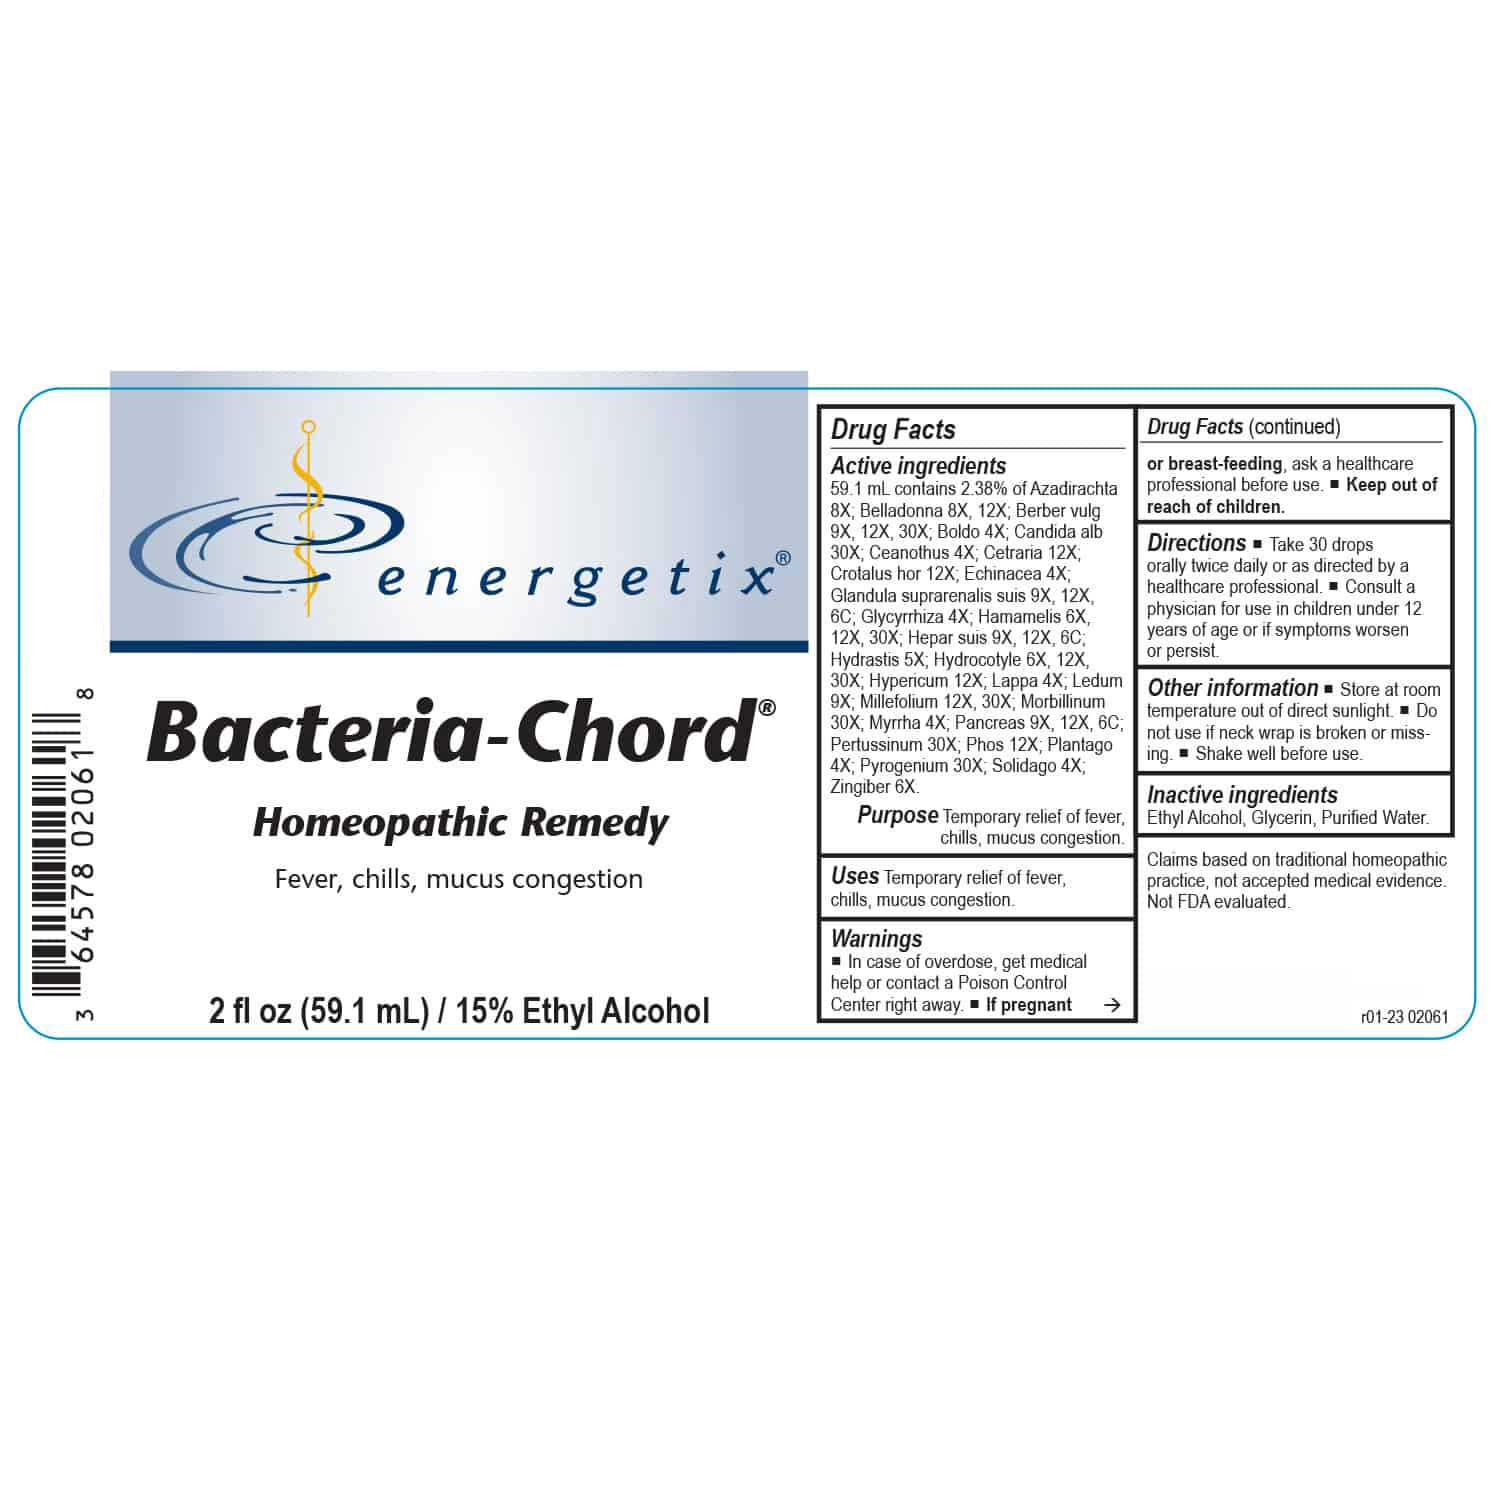 Energetix Bacteria-Chord Label